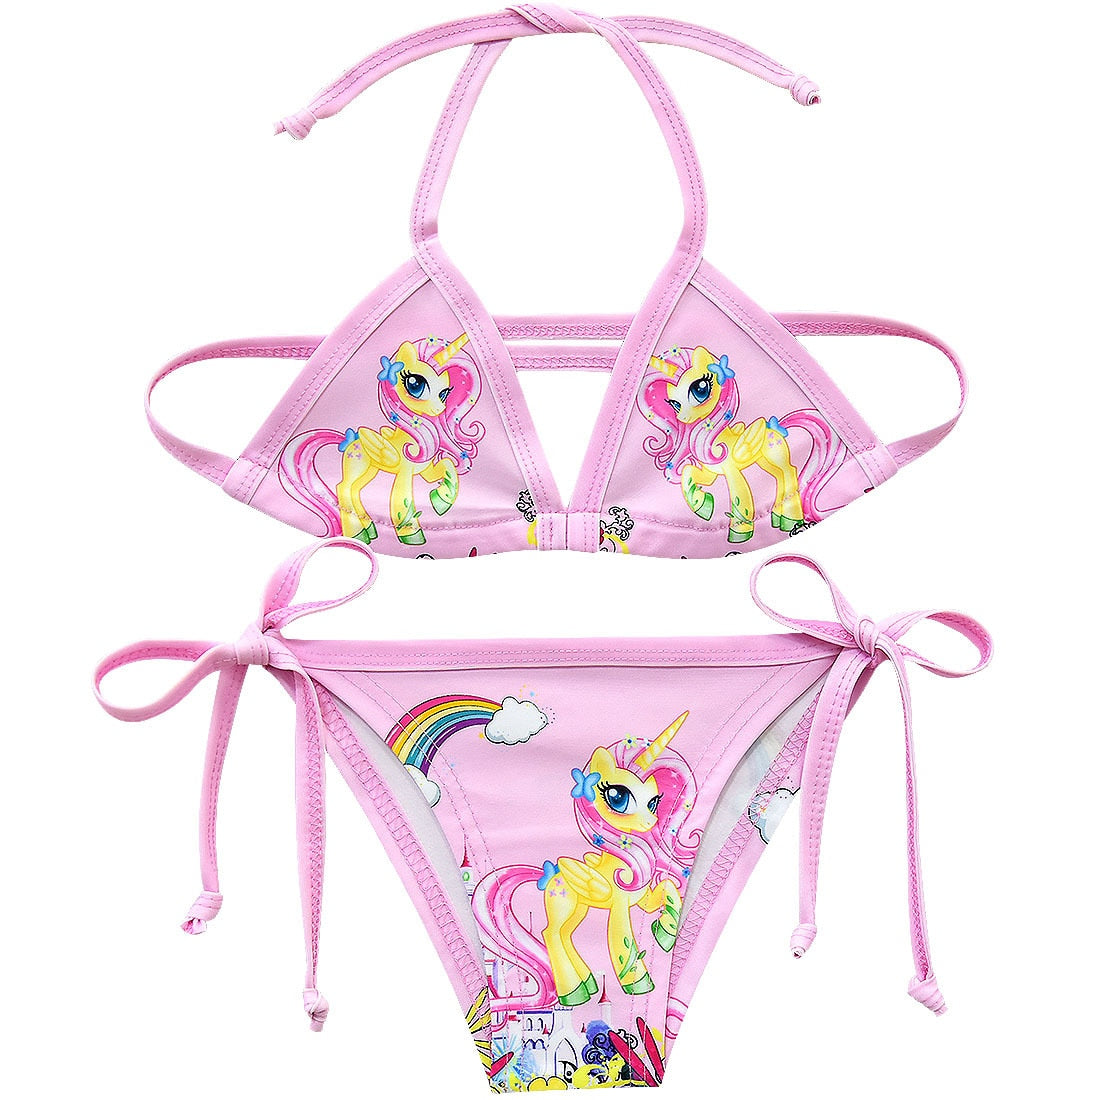 Unicorn Swimsuit For Girls  Two-pieces Bikini Suits Summer Beach Wear